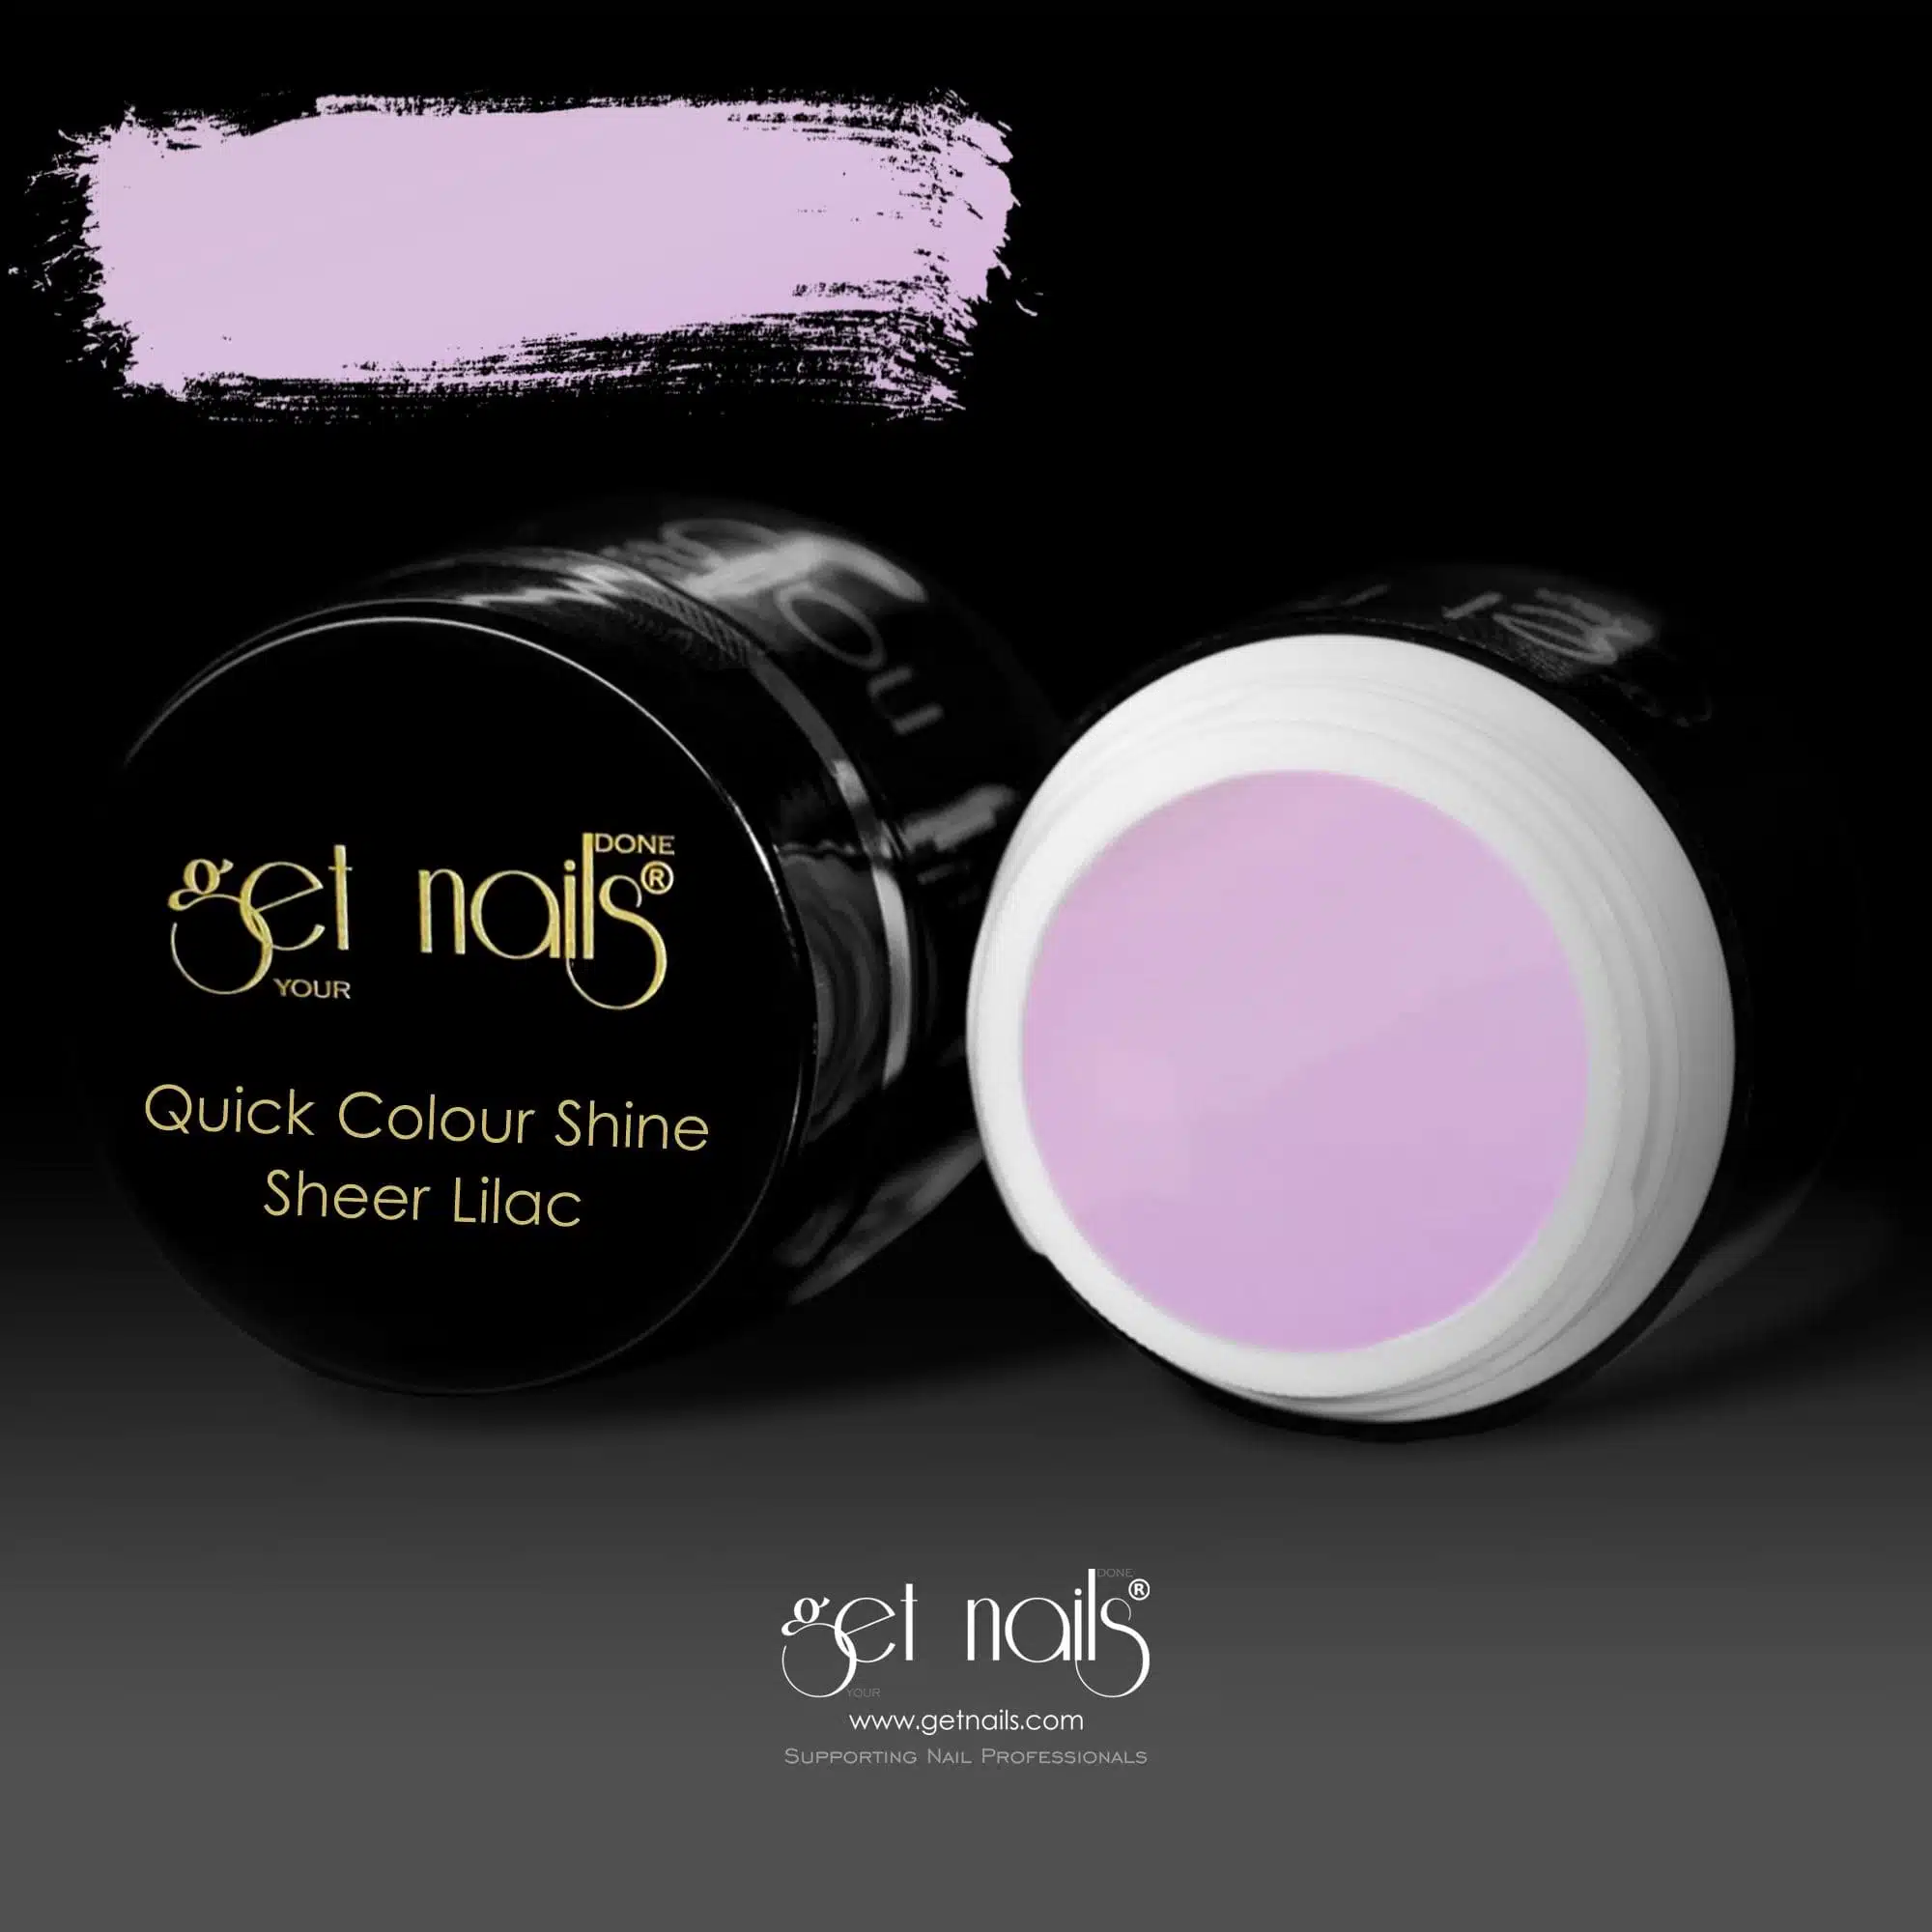 Get Nails Austria - Цветной гель Quick Color Shine Sheer Lilac 5g